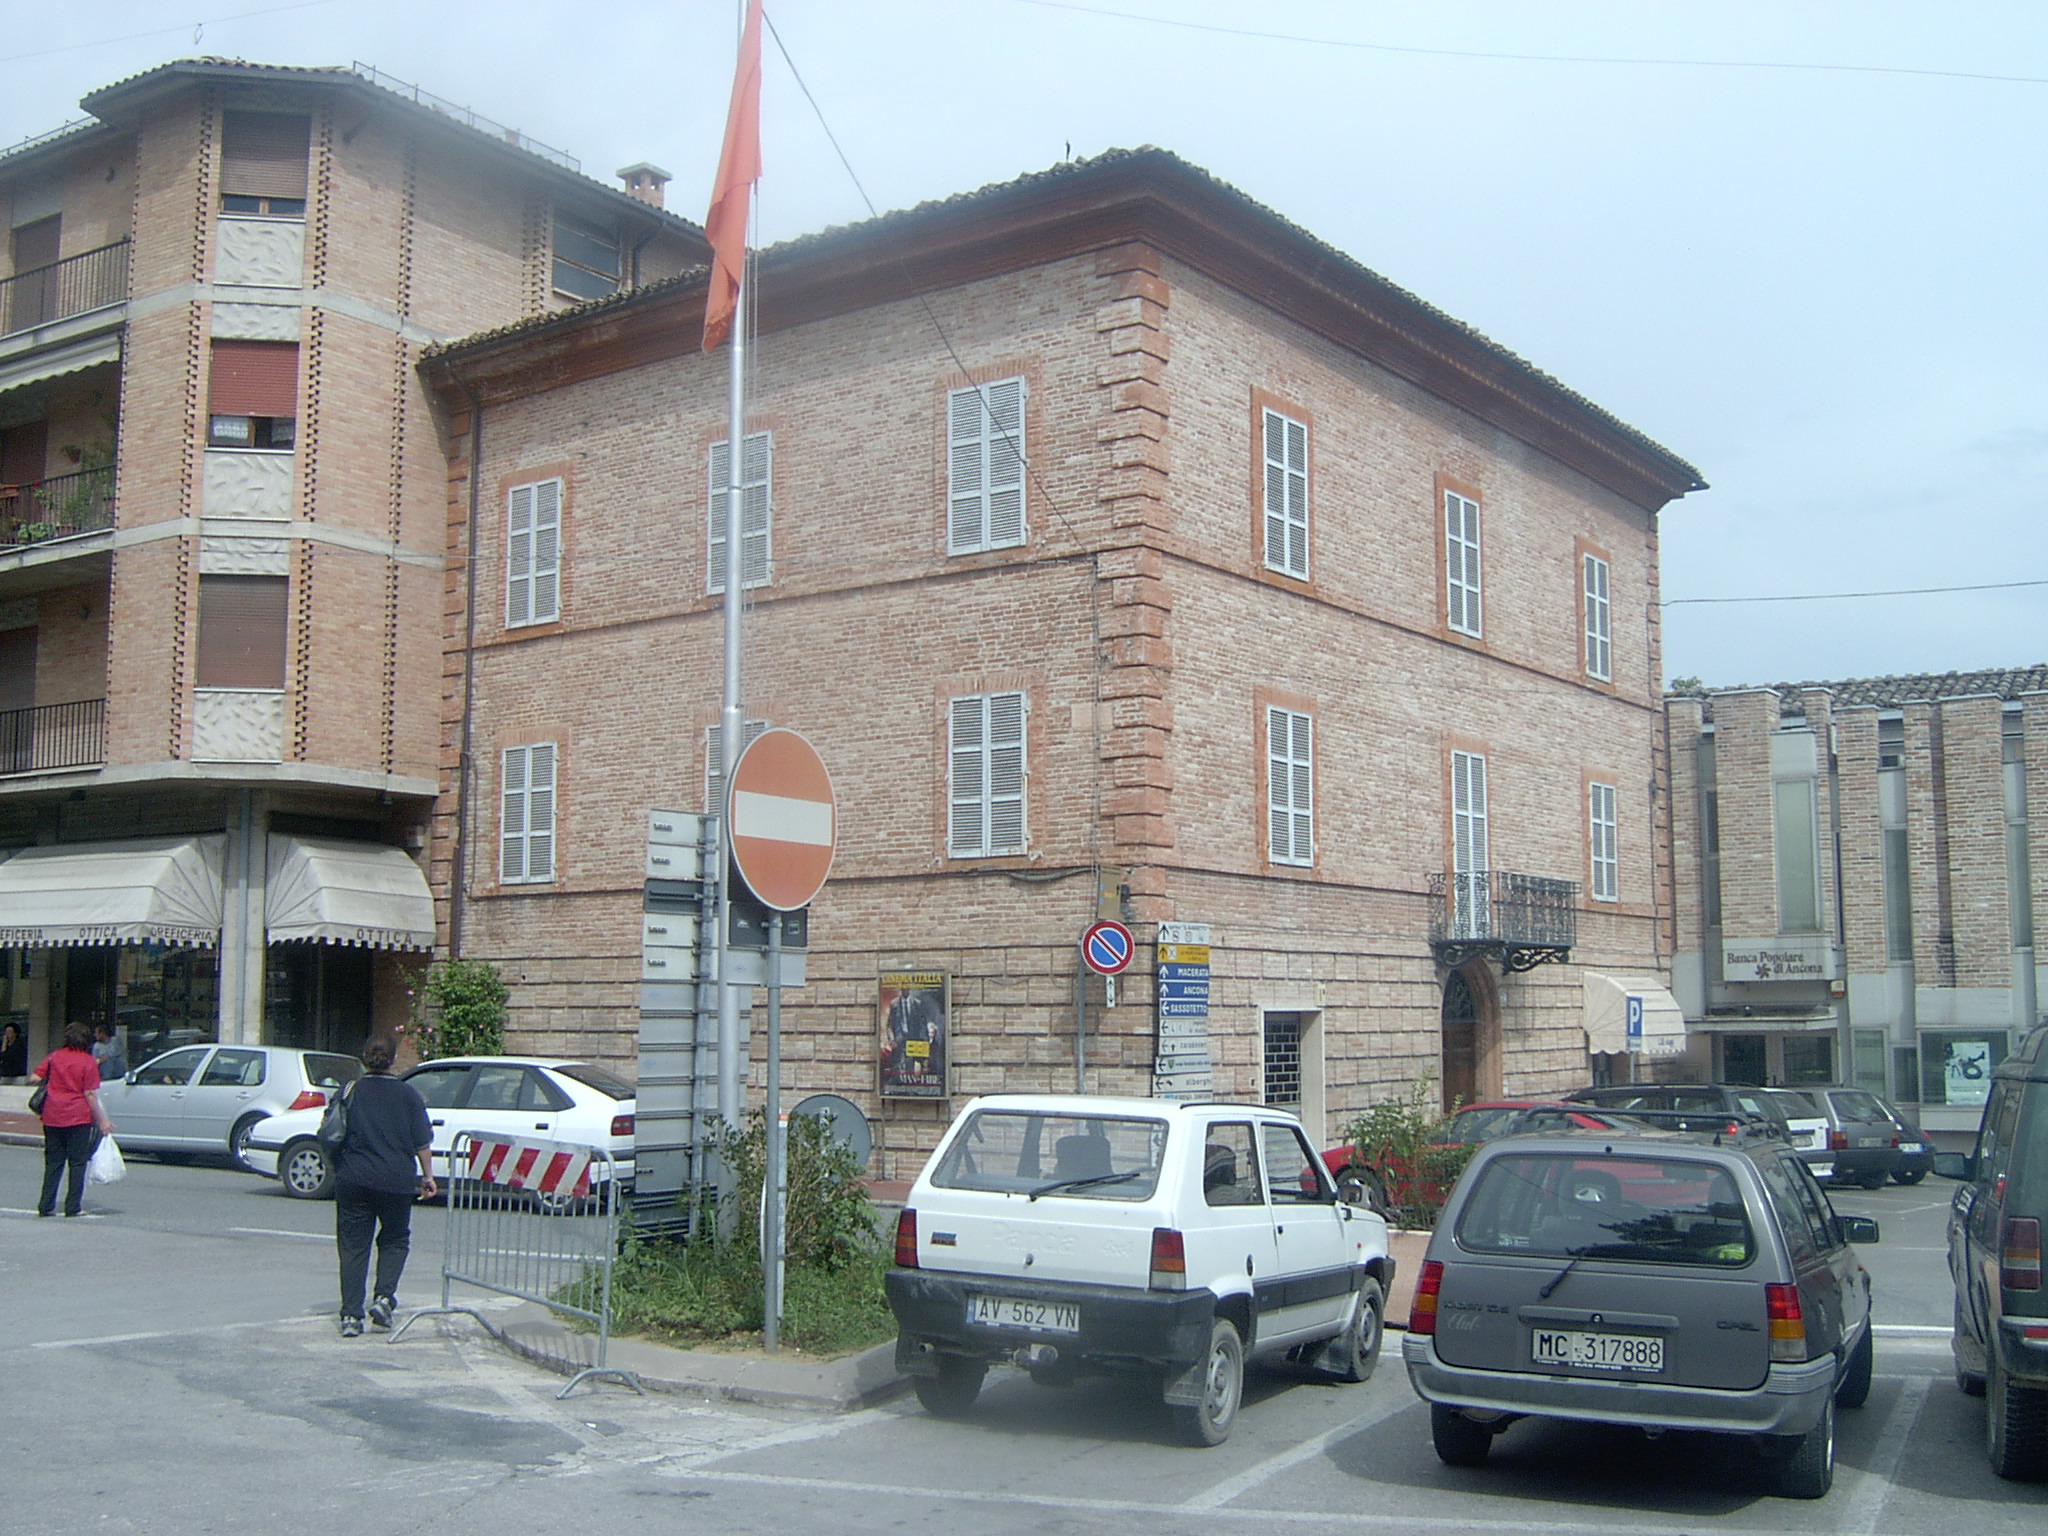 Palazzo signorile (palazzo, signorile) - Sarnano (MC) 